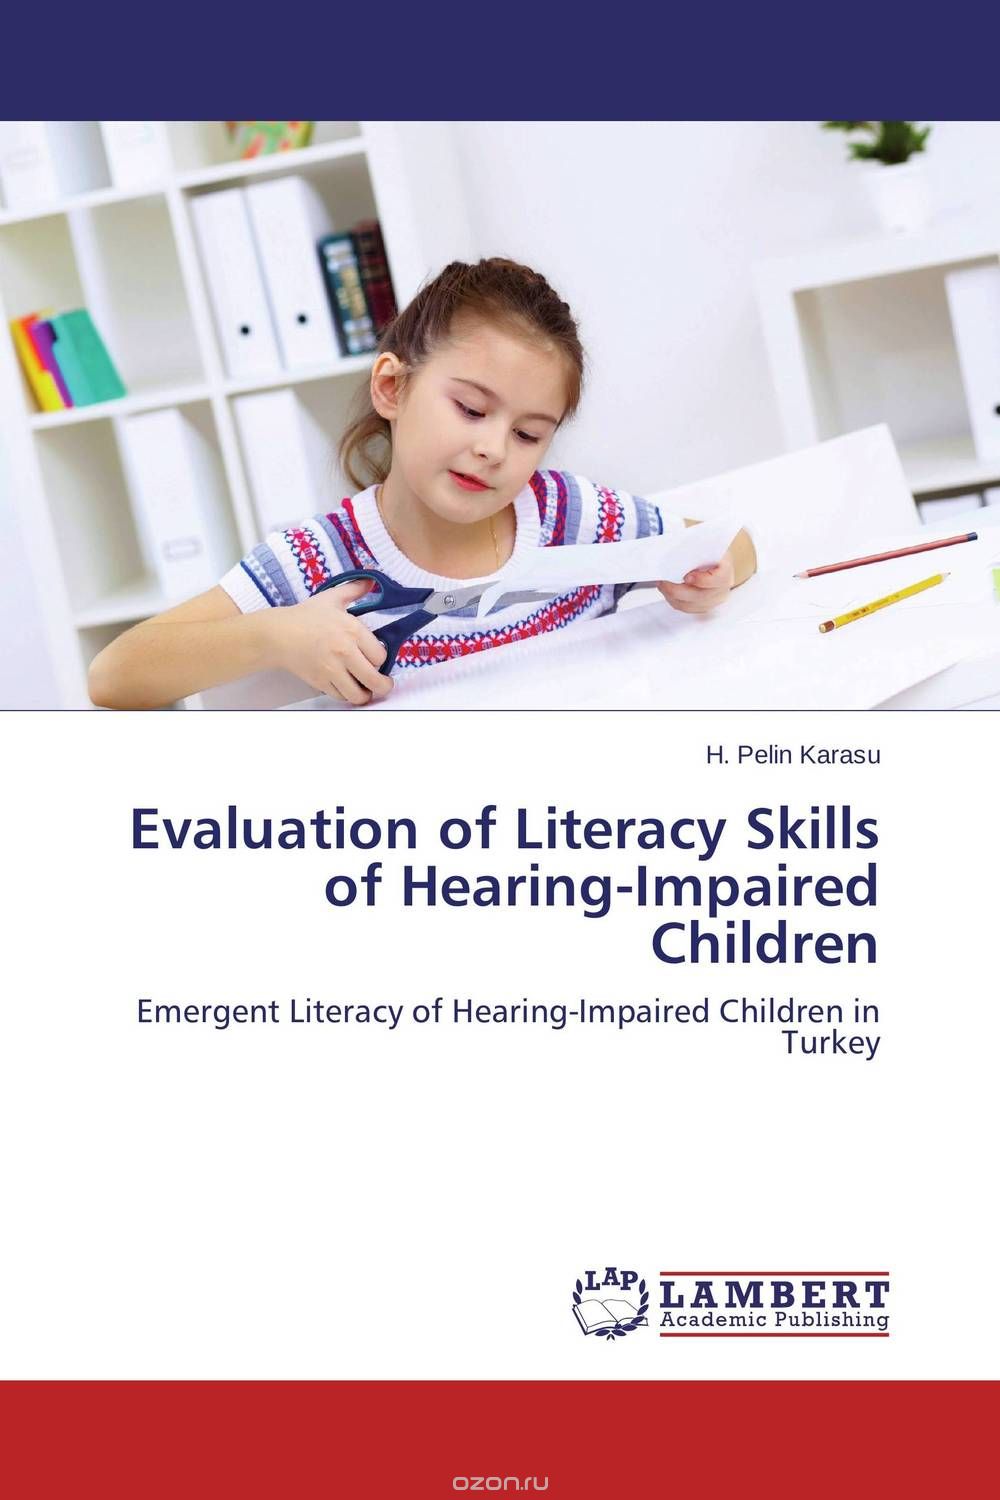 Скачать книгу "Evaluation of Literacy Skills of Hearing-Impaired Children"